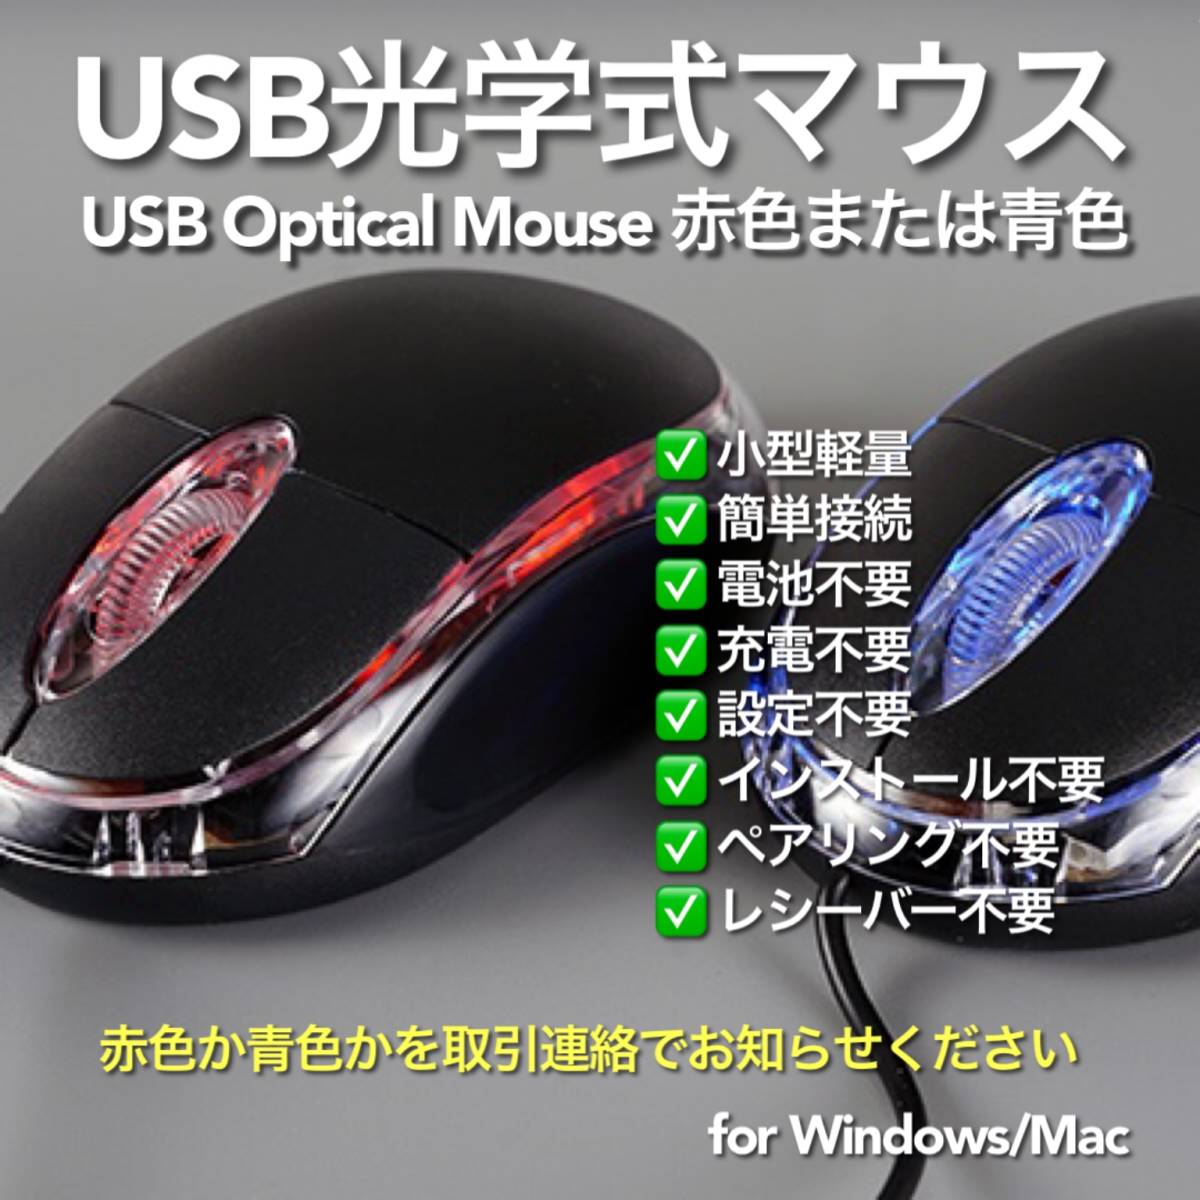 USBマウス 有線 光学式 赤青どちらか1個 Optical Mouse #1 在宅勤務 テレワーク リモートワーク 遠隔授業 リモート授業_画像1